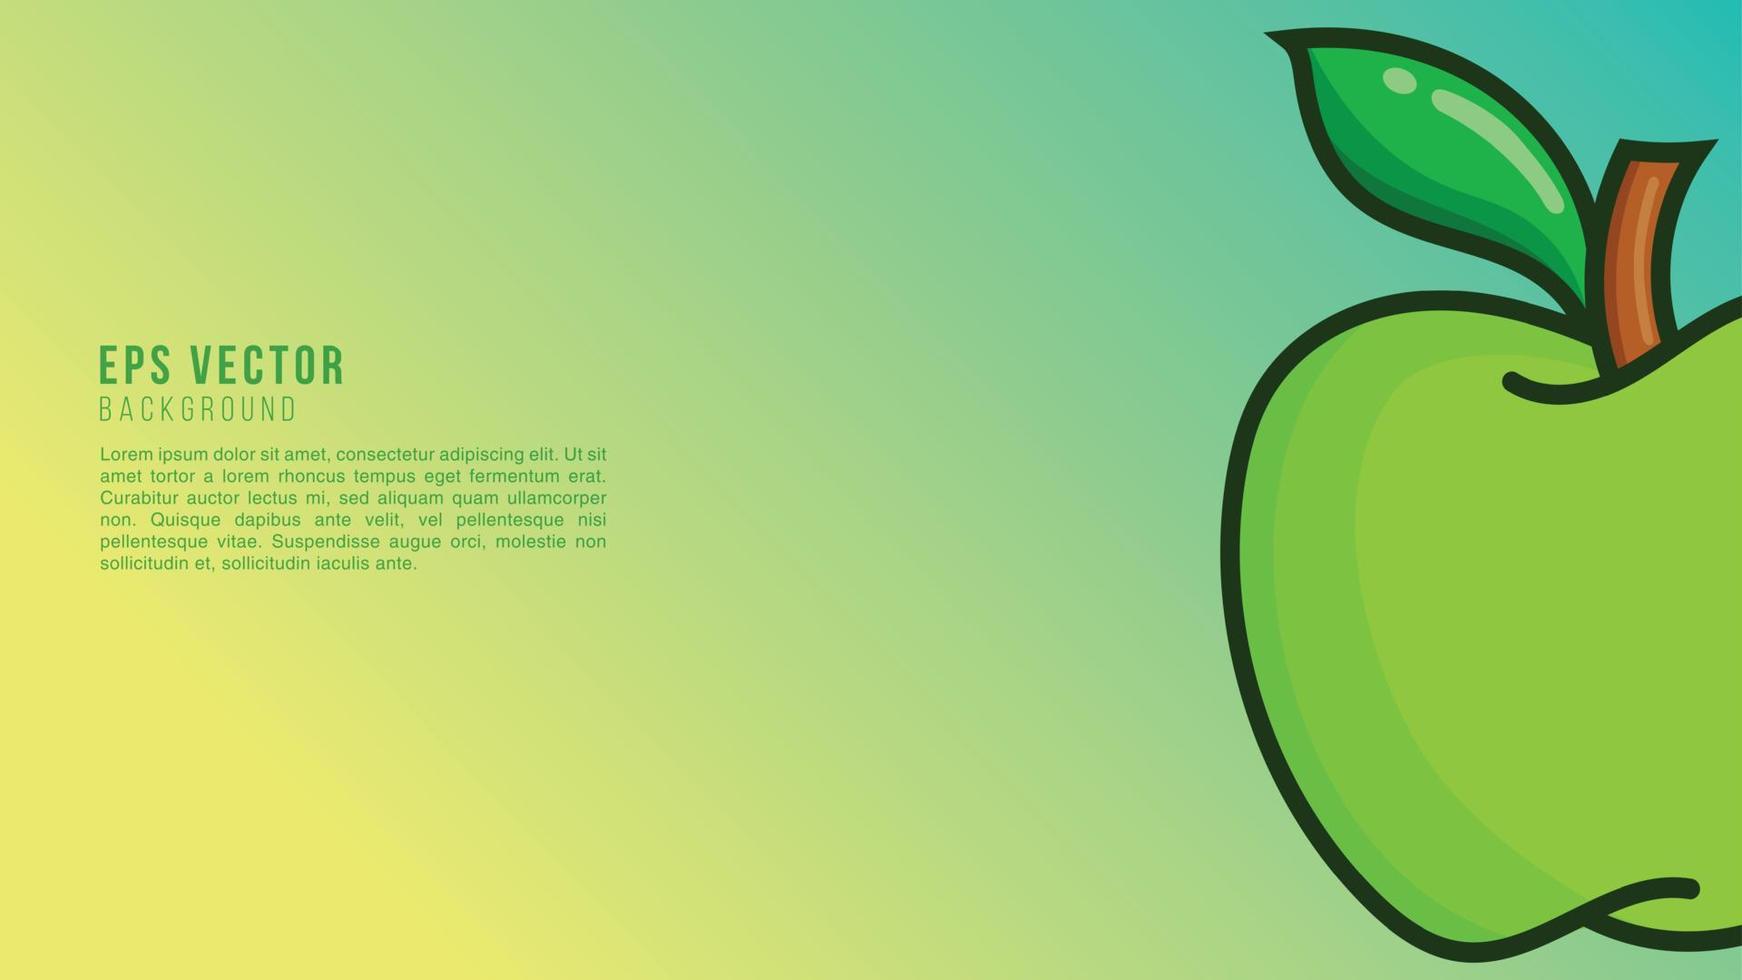 grön äpple lutning linje form bakgrund abstrakt eps vektor